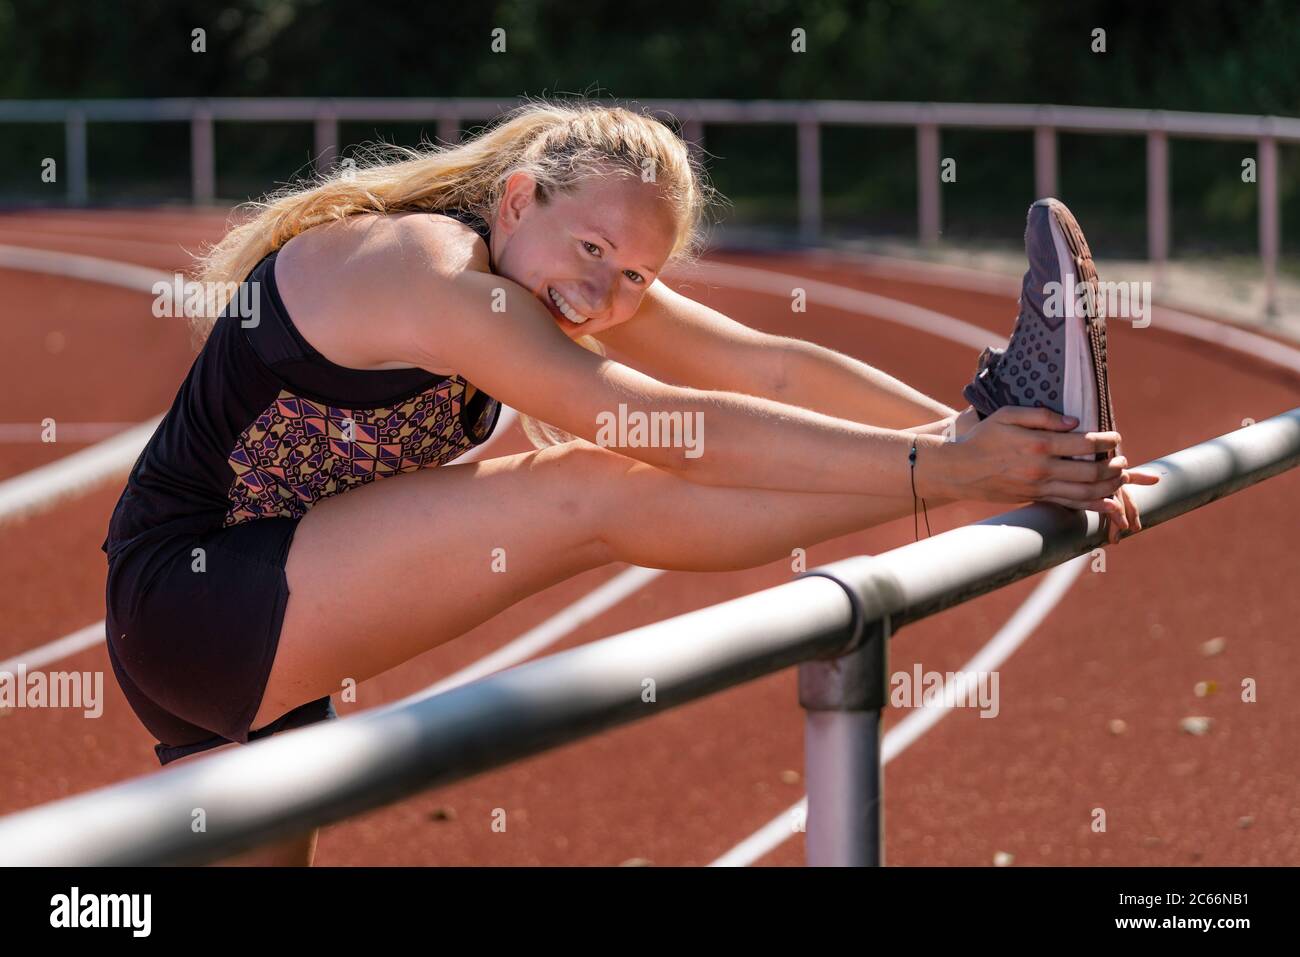 Woman, 21 years old, athletics, gymnastics Stock Photo